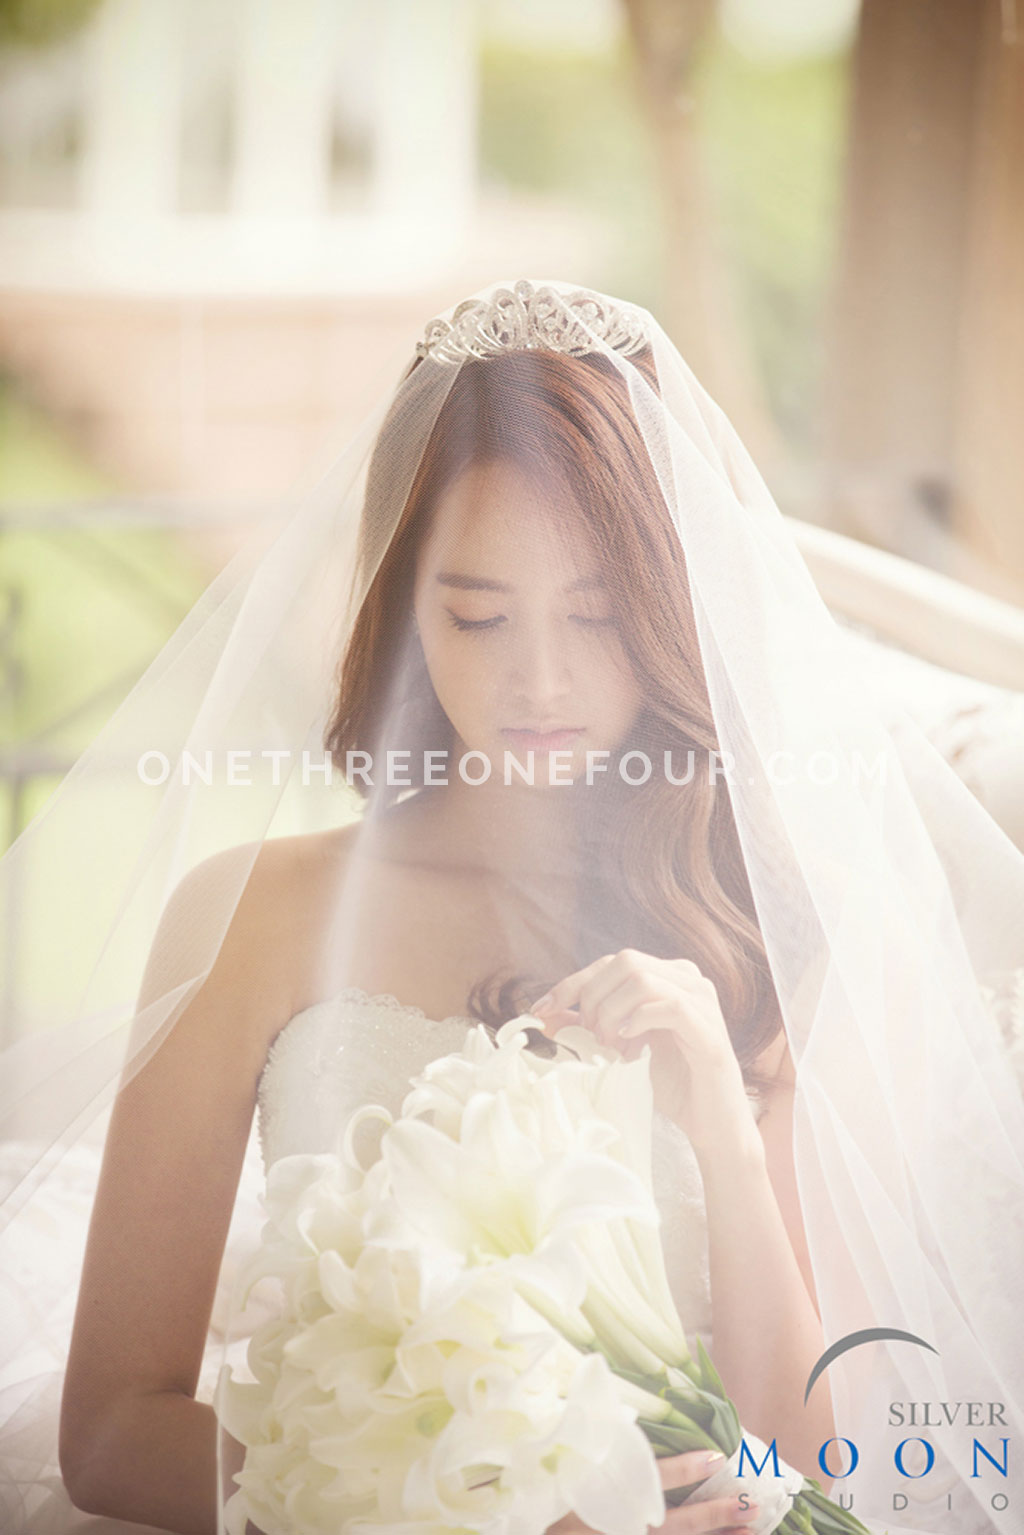 Korean Studio Pre-Wedding Photography: Dream by Silver Moon Studio on OneThreeOneFour 3